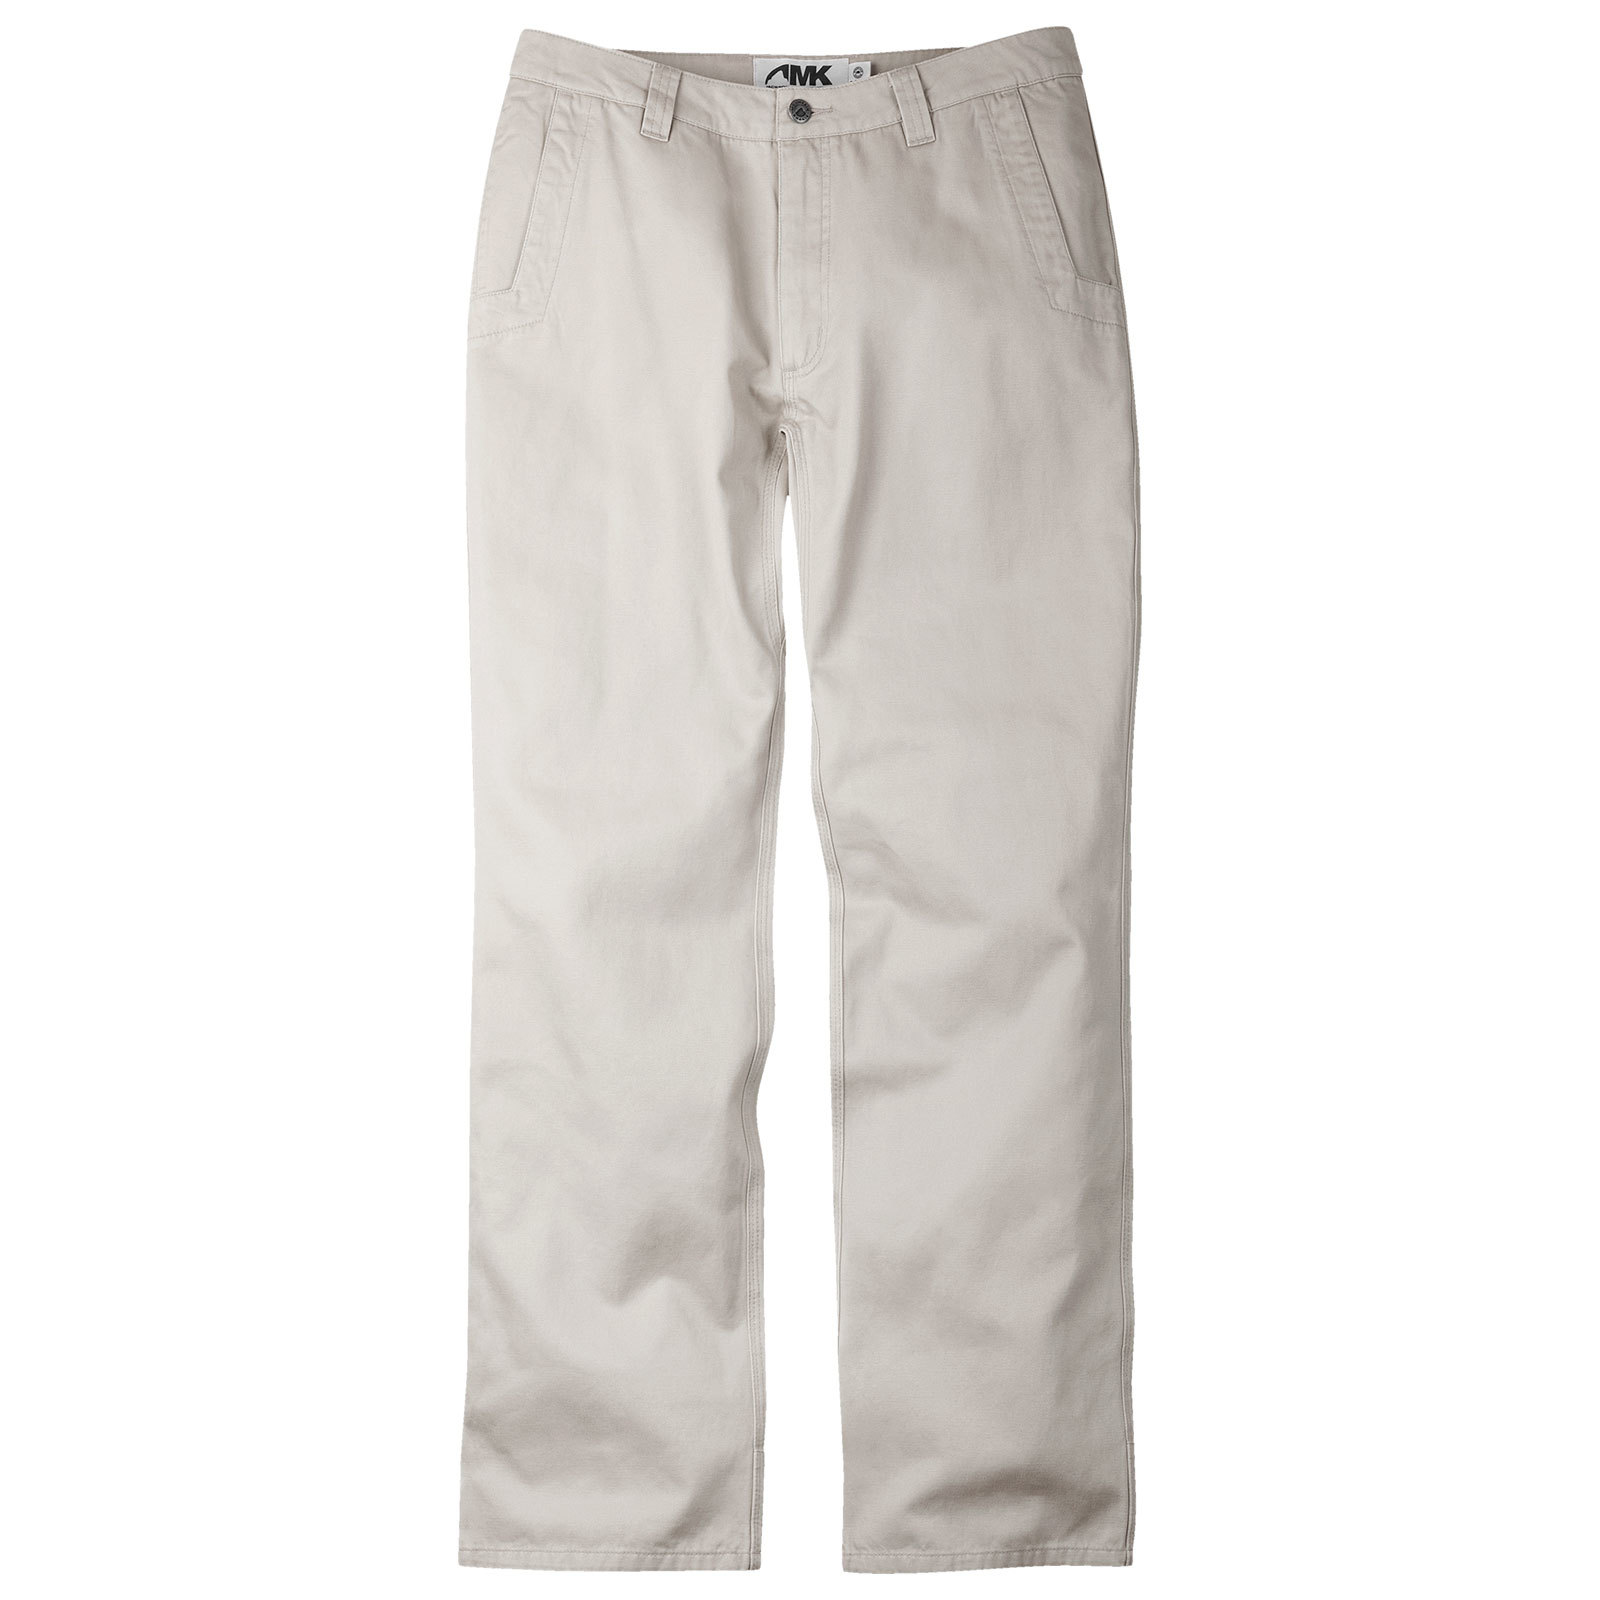 Teton Twill Pant | Timeless Cotton Twill Men's Pants | MK